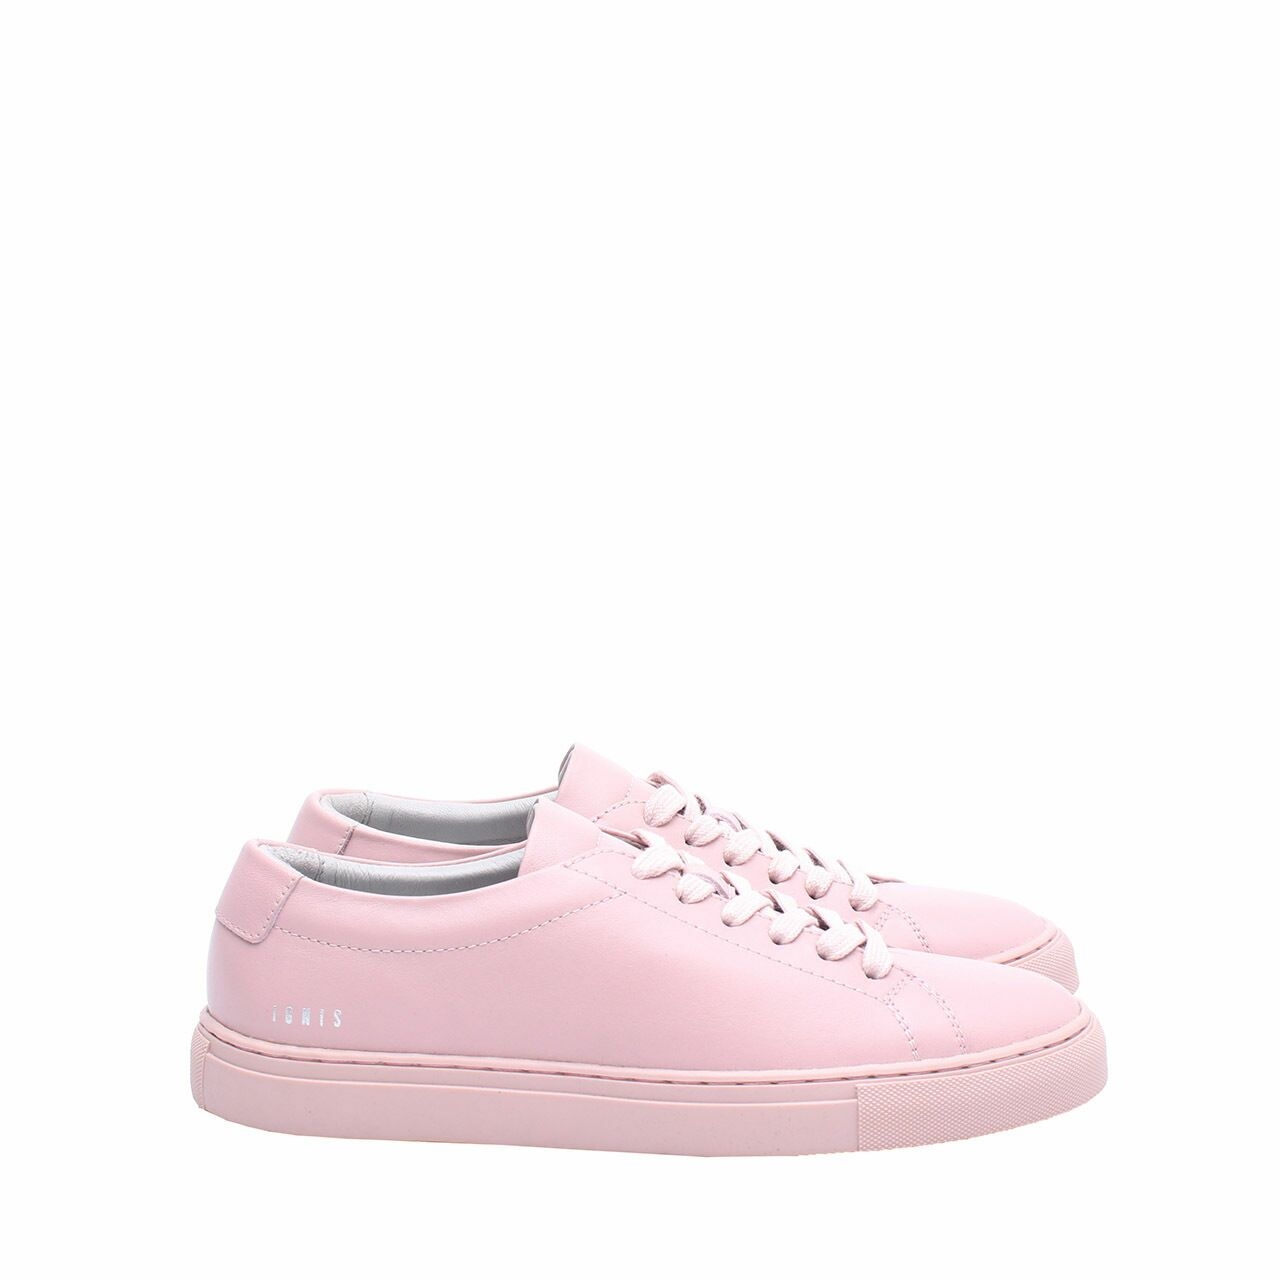 Ignis Adagio Blush Pink Sneakers